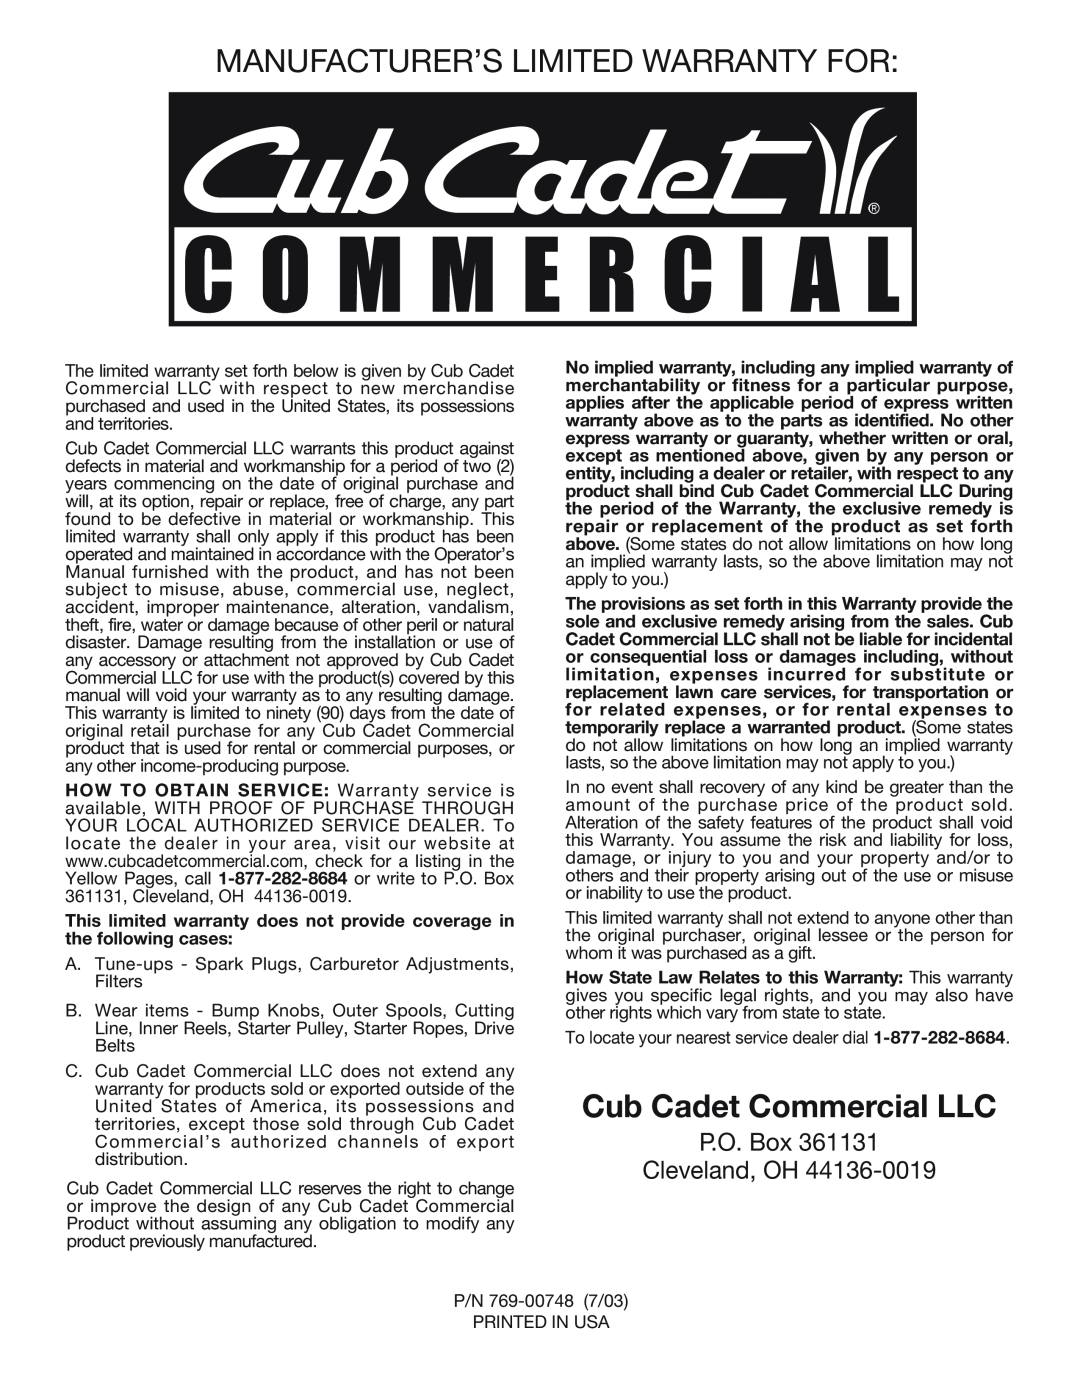 Cub Cadet CS5018, CS5220 manual Cub Cadet Commercial LLC, Manufacturer’S Limited Warranty For, P.O. Box Cleveland, OH 